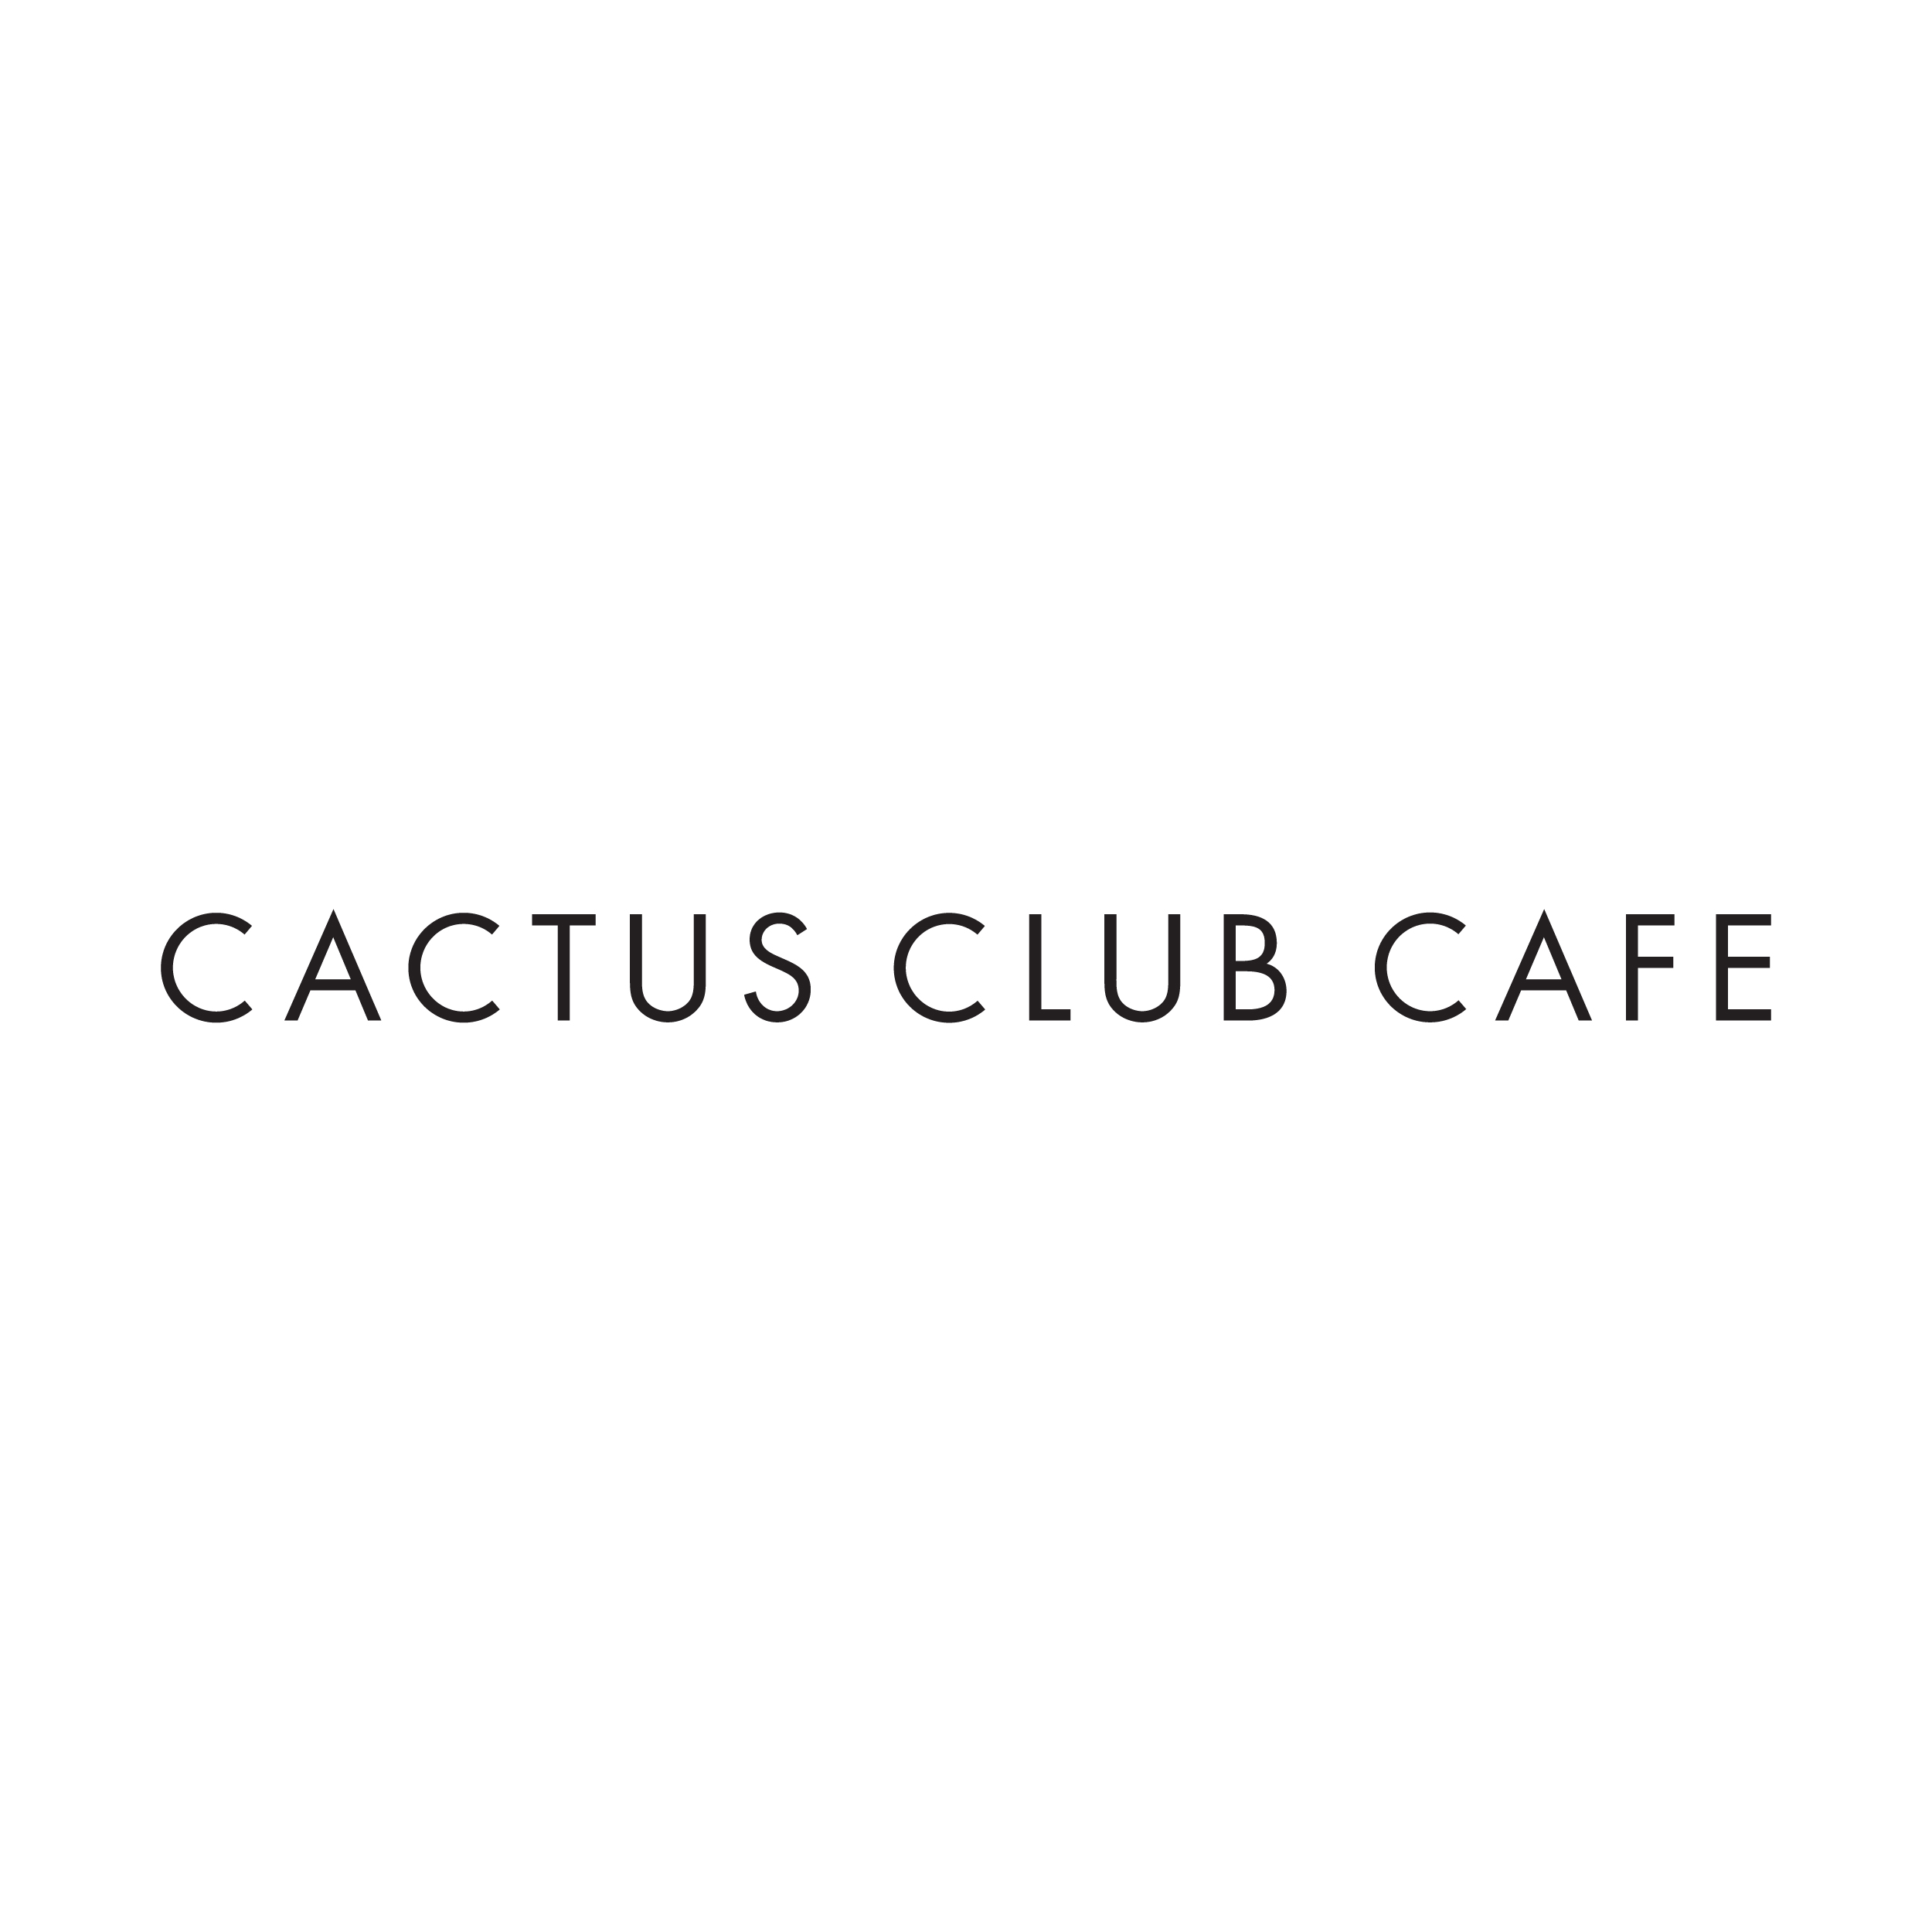 New Cactus Club Location To Open In Coquitlam Centre